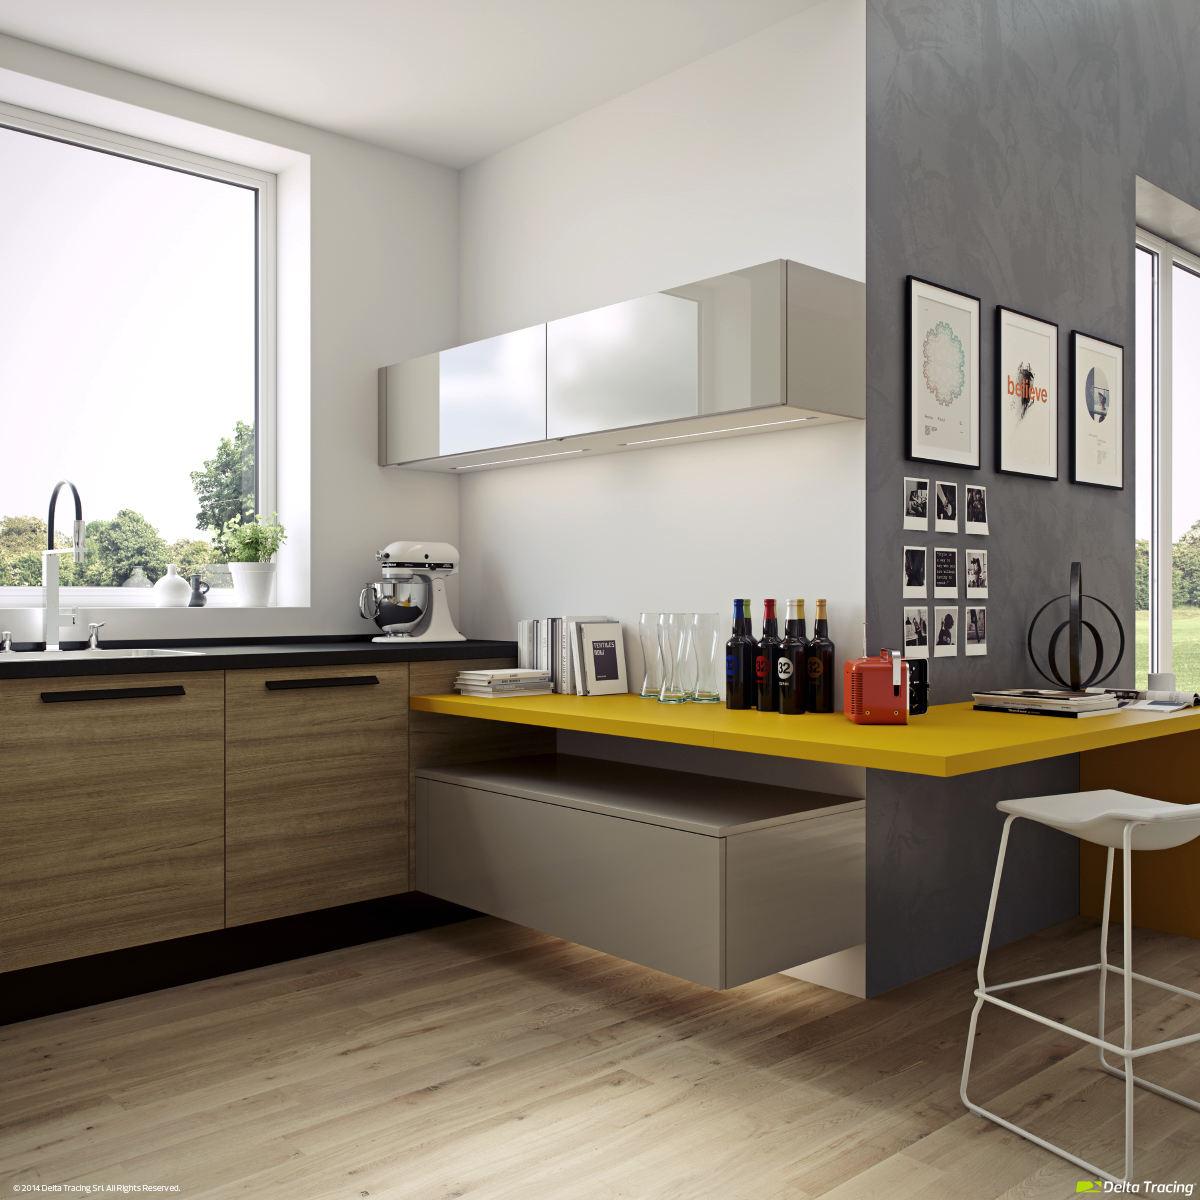 kitchen-countertops-in-yellow